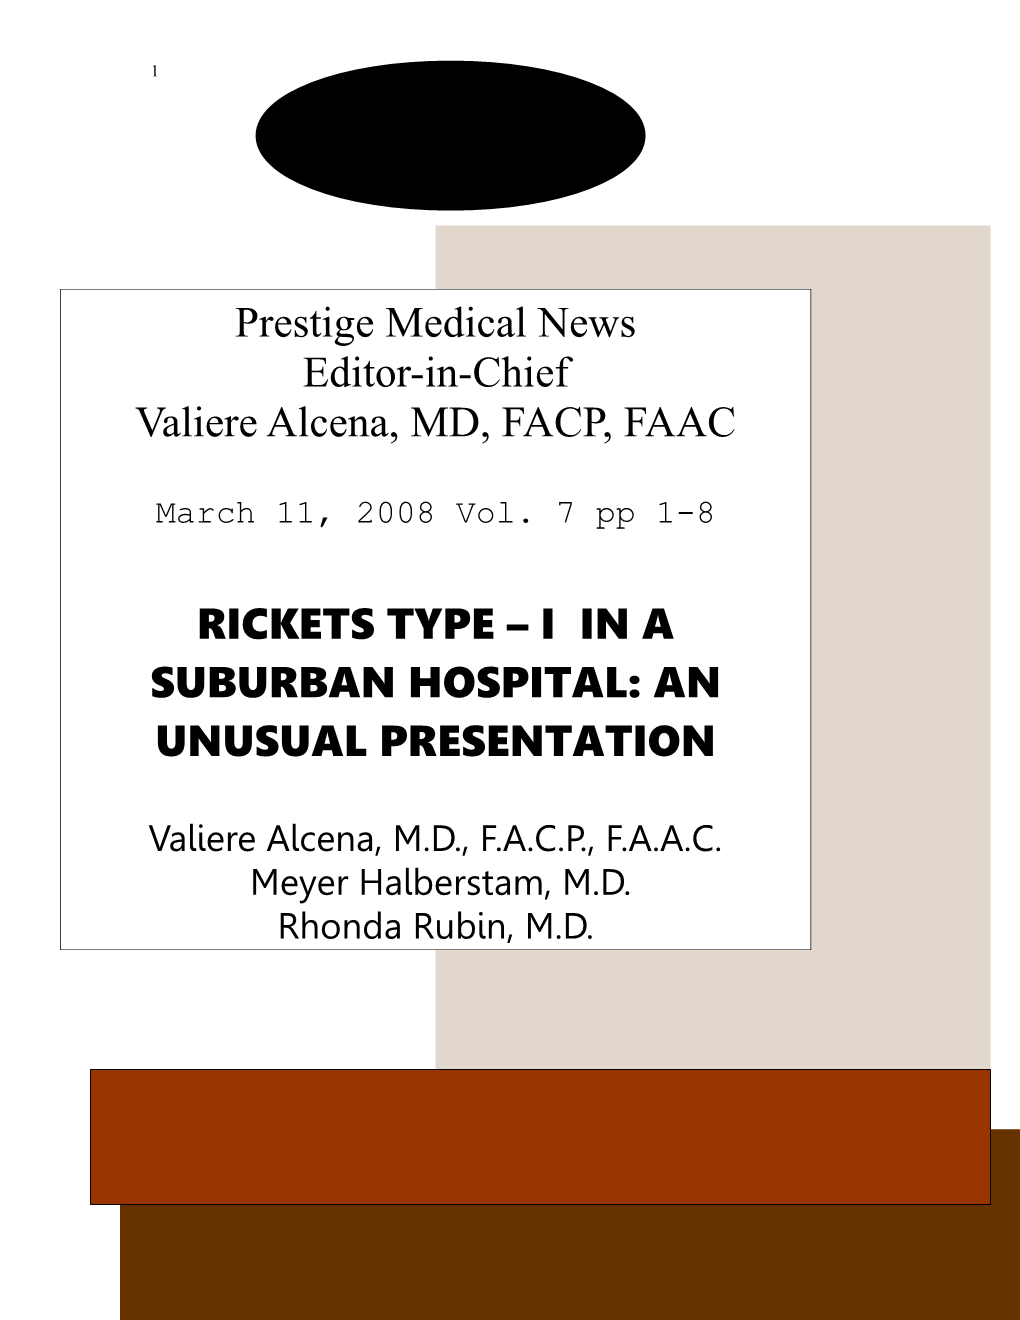 Rickets Type I in a Suburban Hospital: an Unusual Presentation